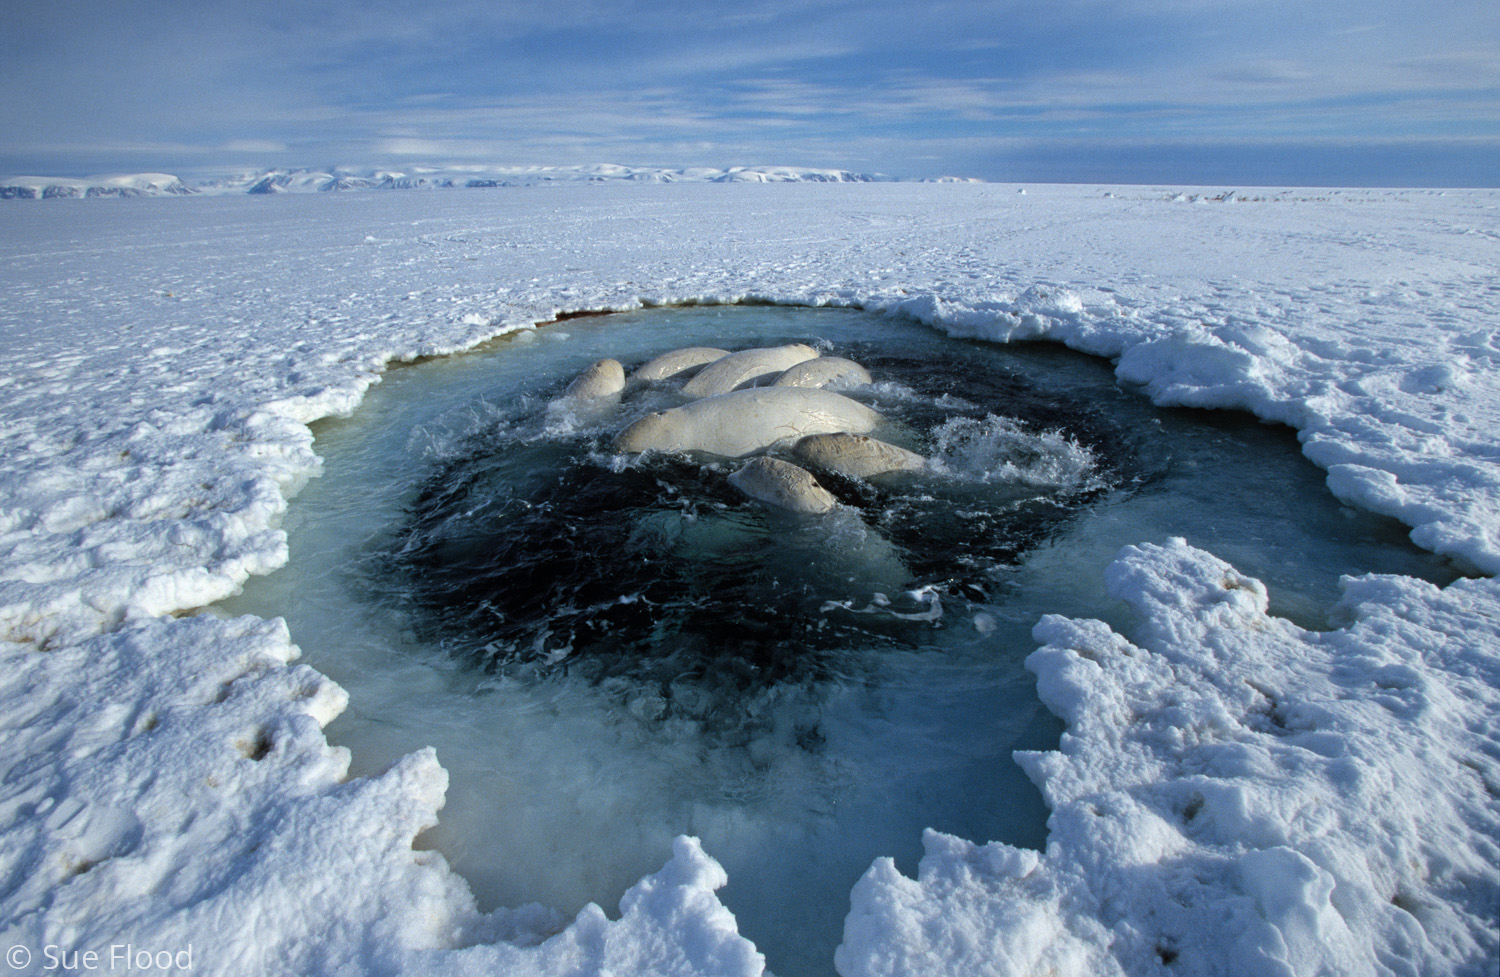 Beluga whales caught in savssat, Nunavut, Canadian high Arctic.